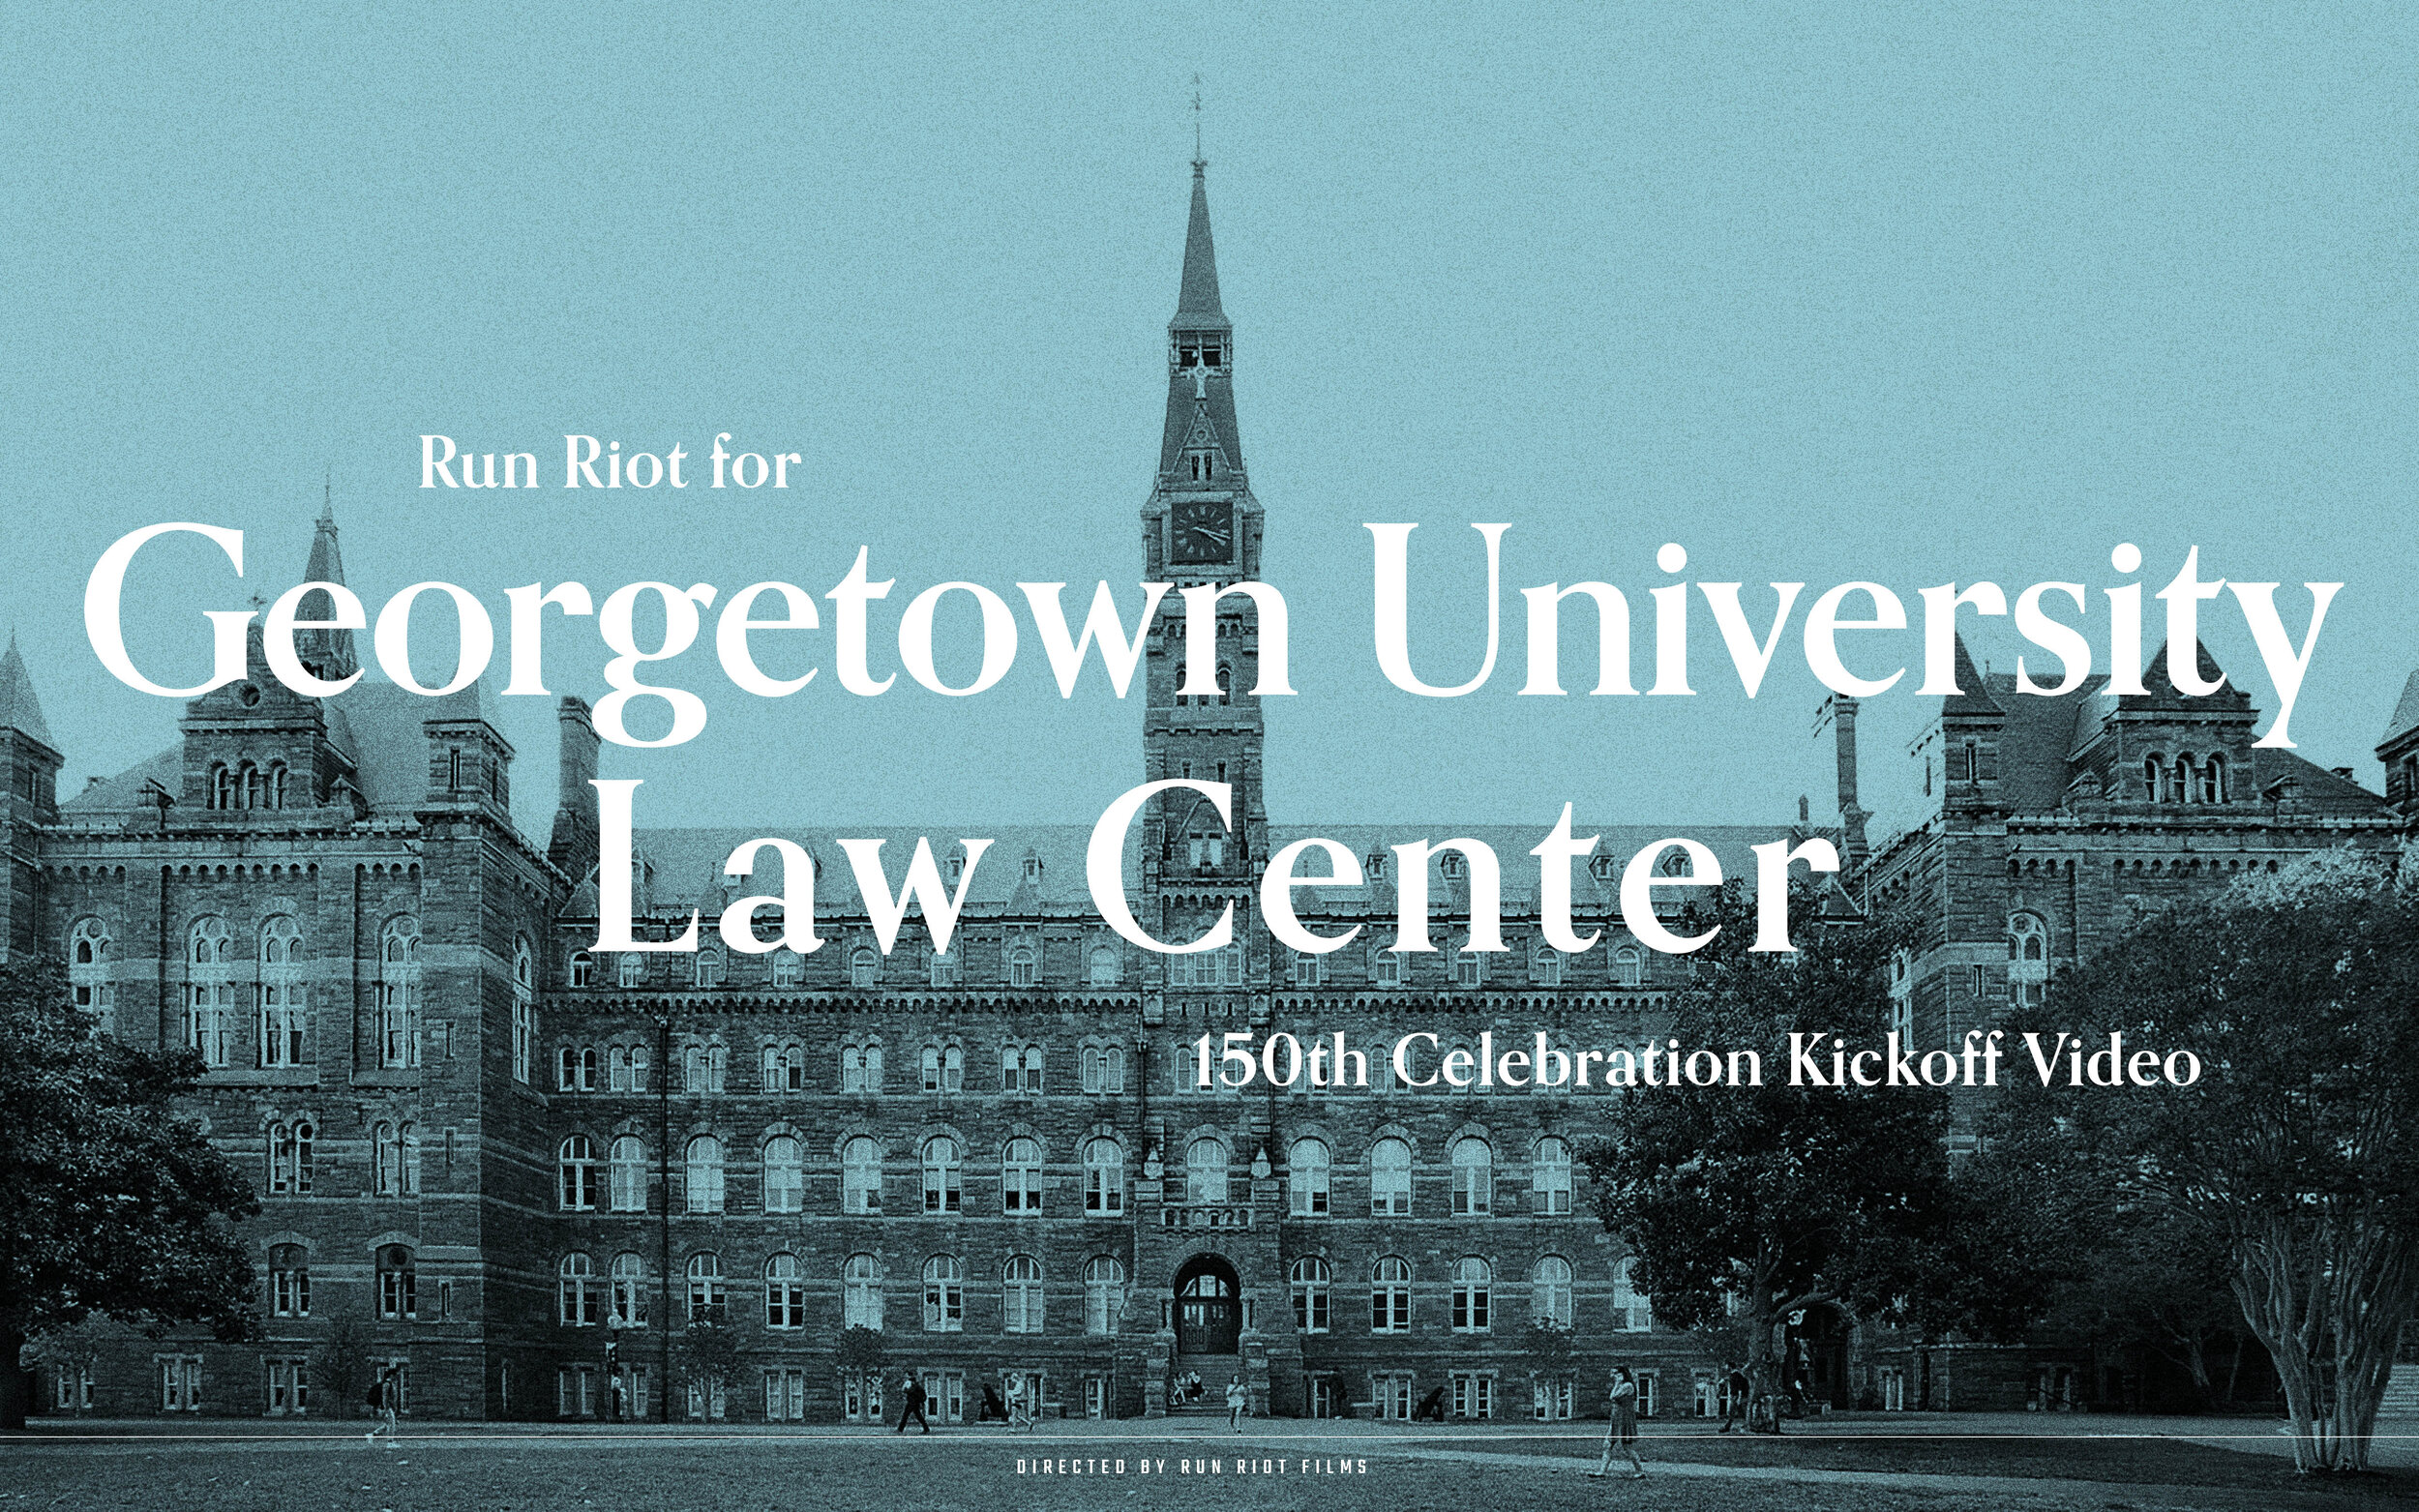 RRF_Georgetown Law_dummy text.jpg